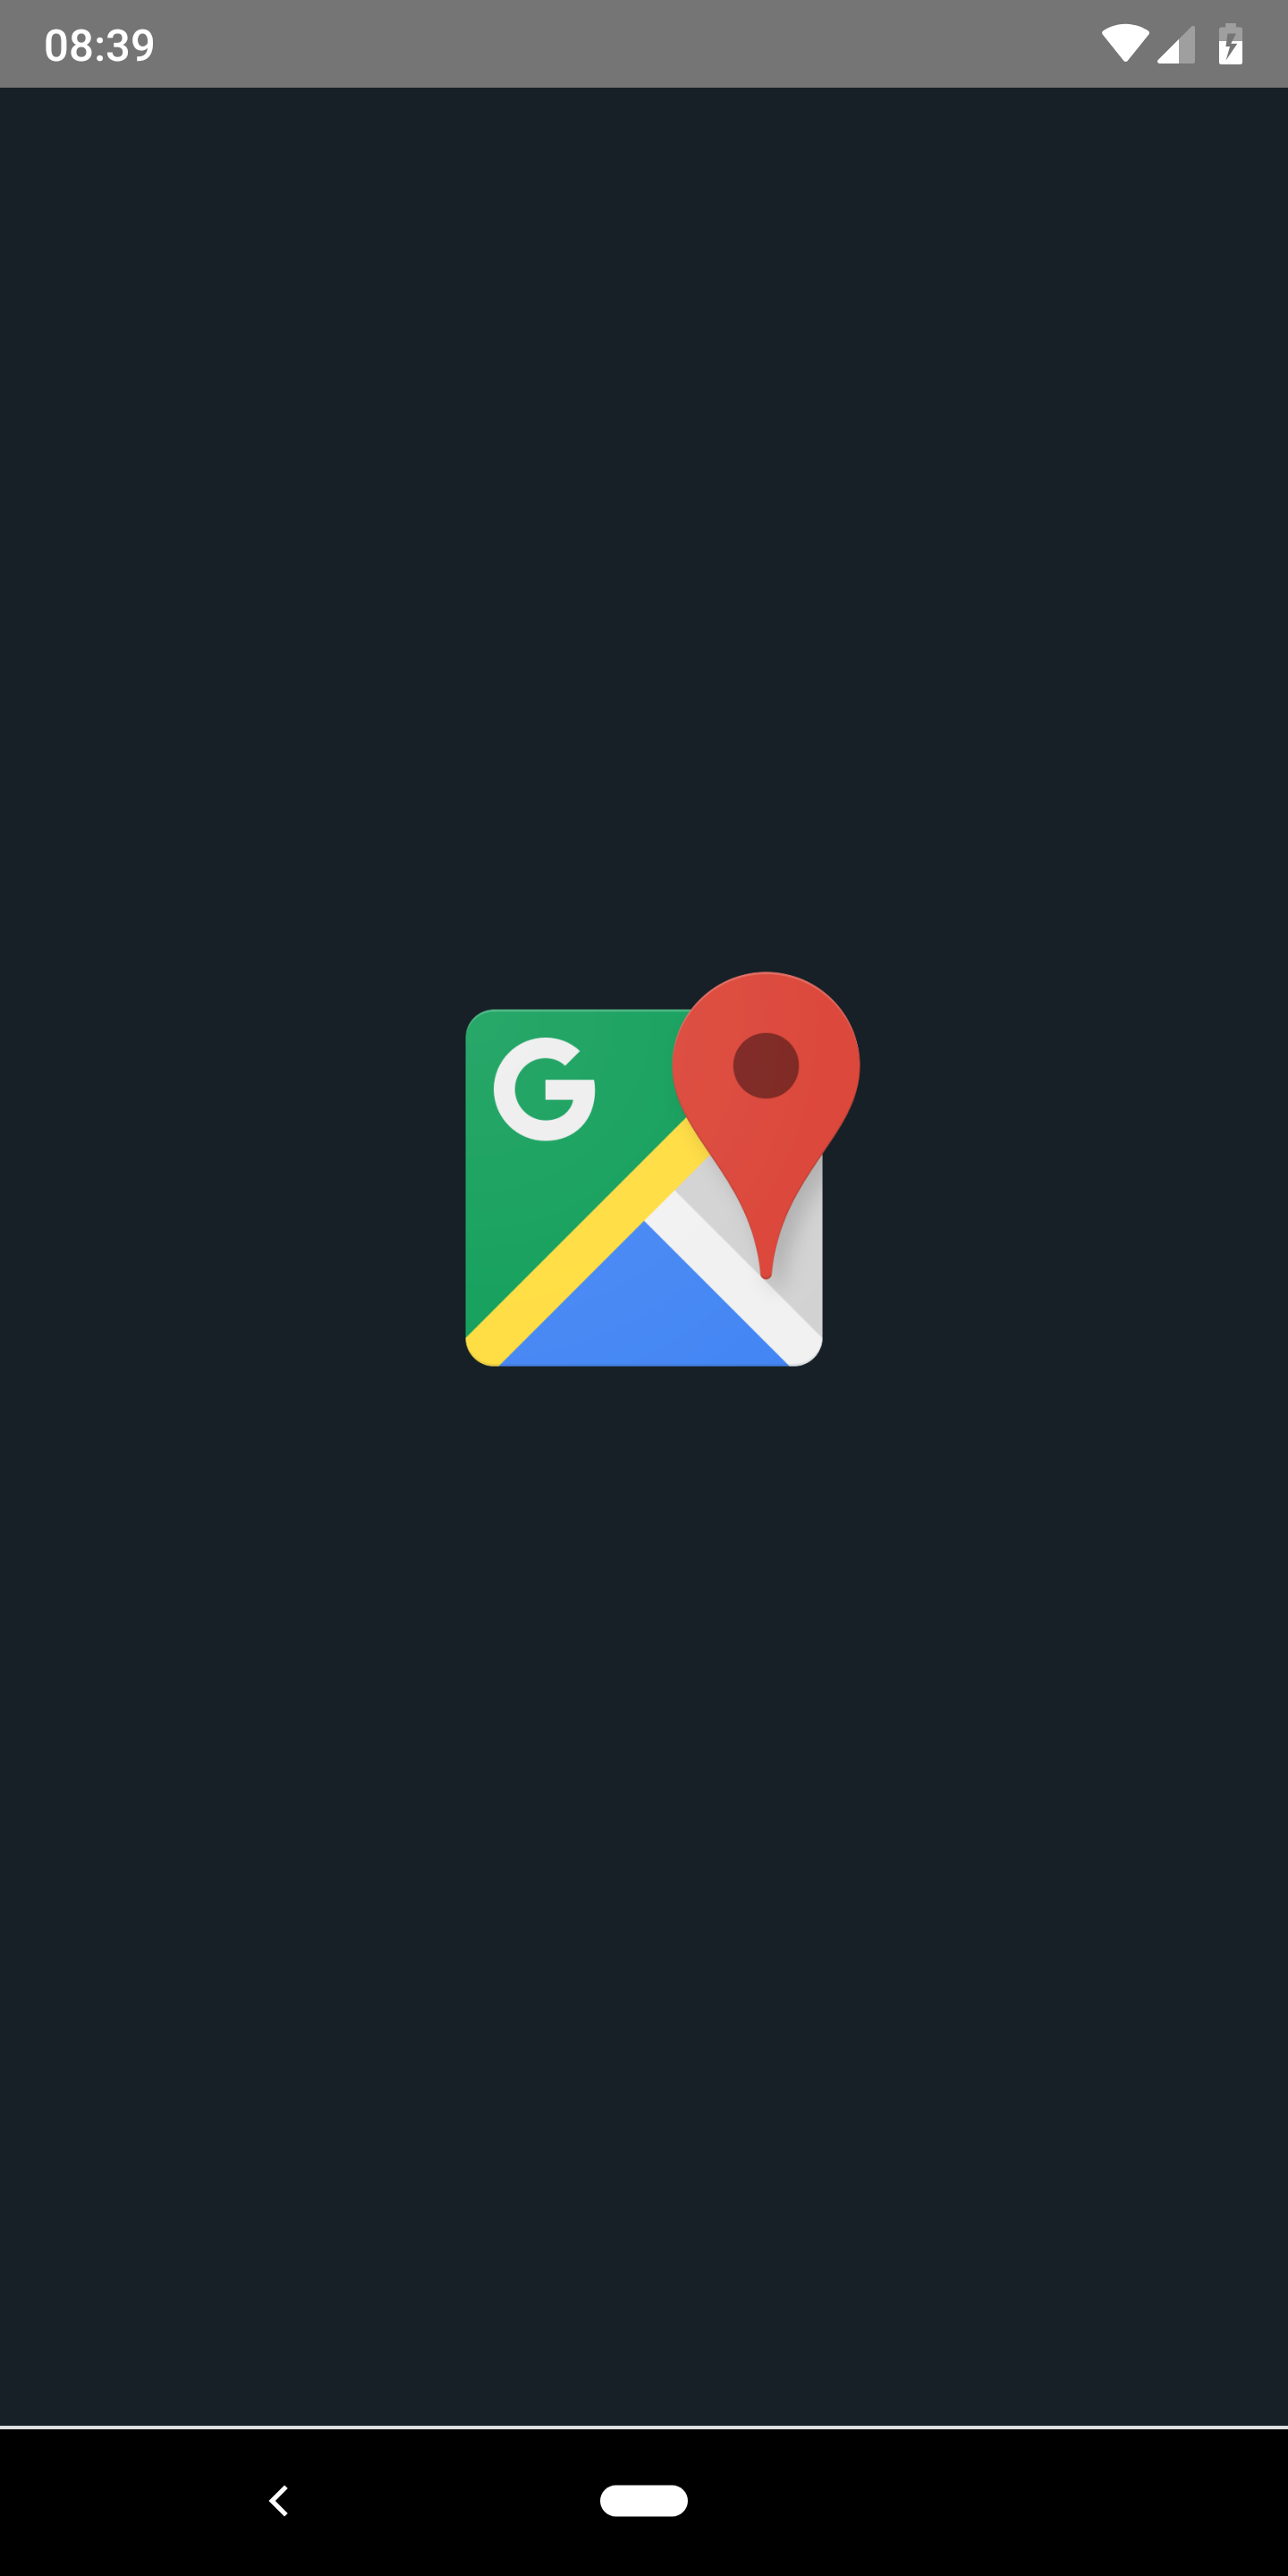 Global Dark Theme Google Maps Loading Screen Has A